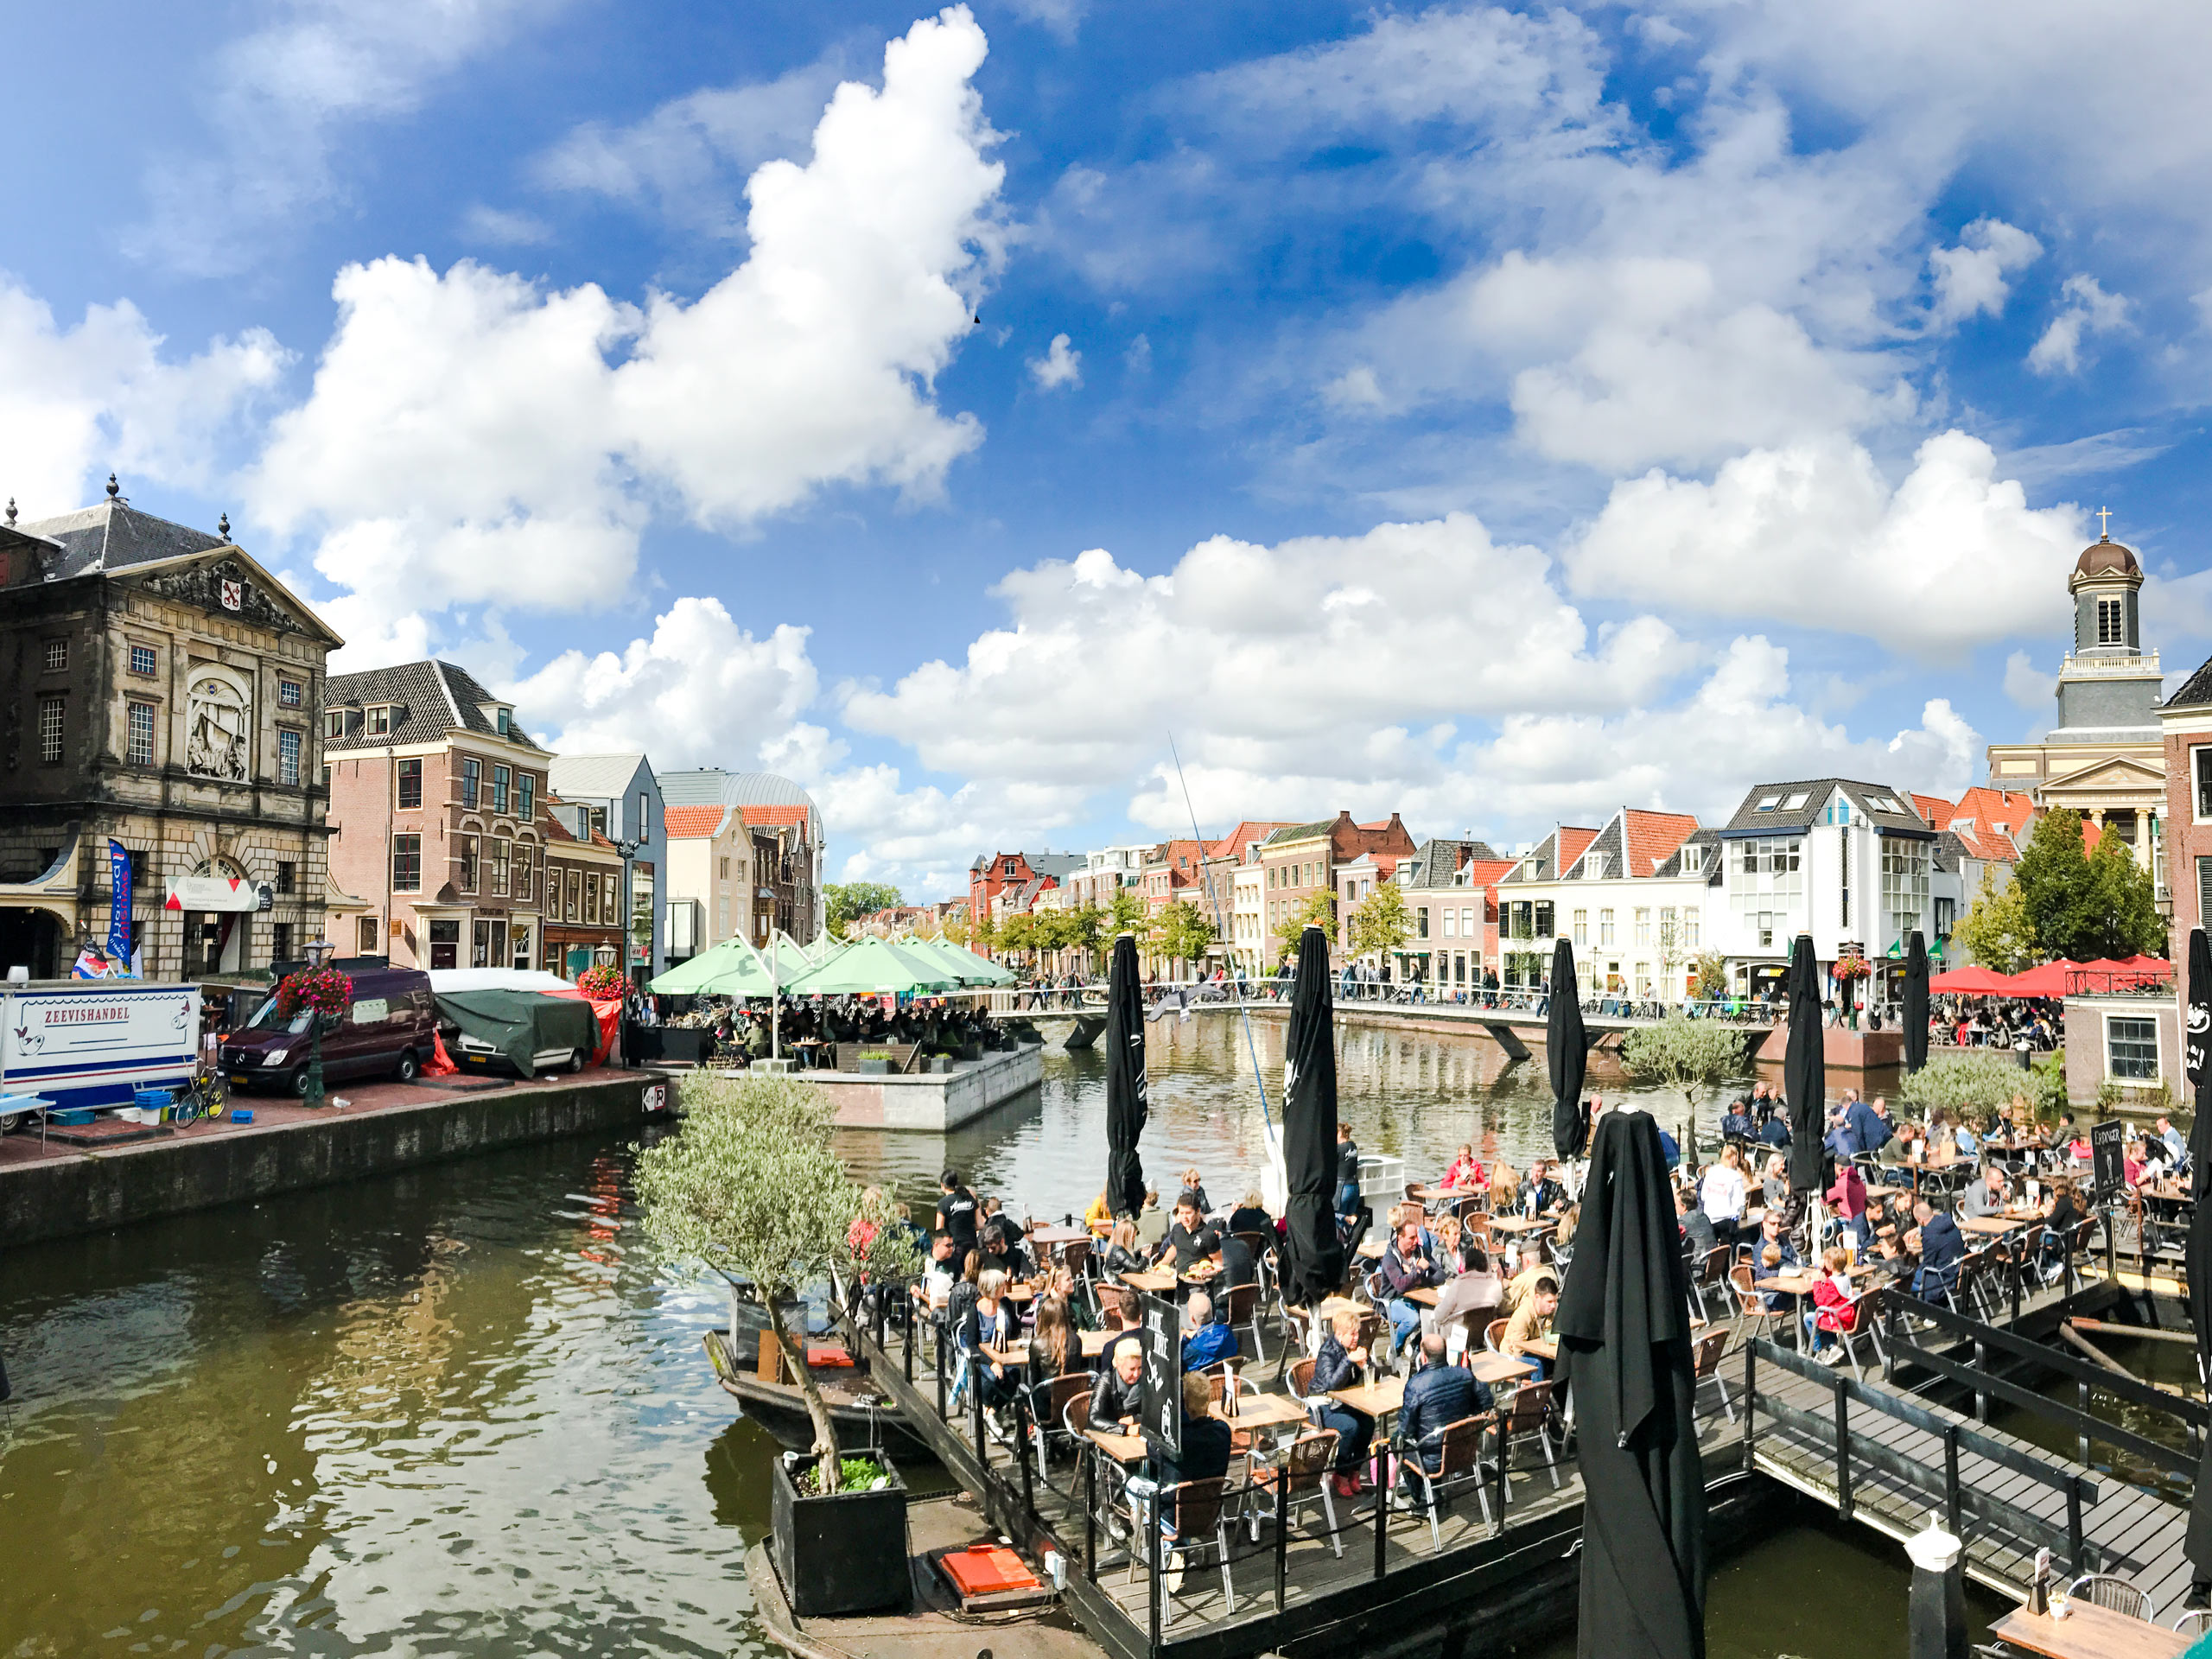 Leiden cafe on the pier